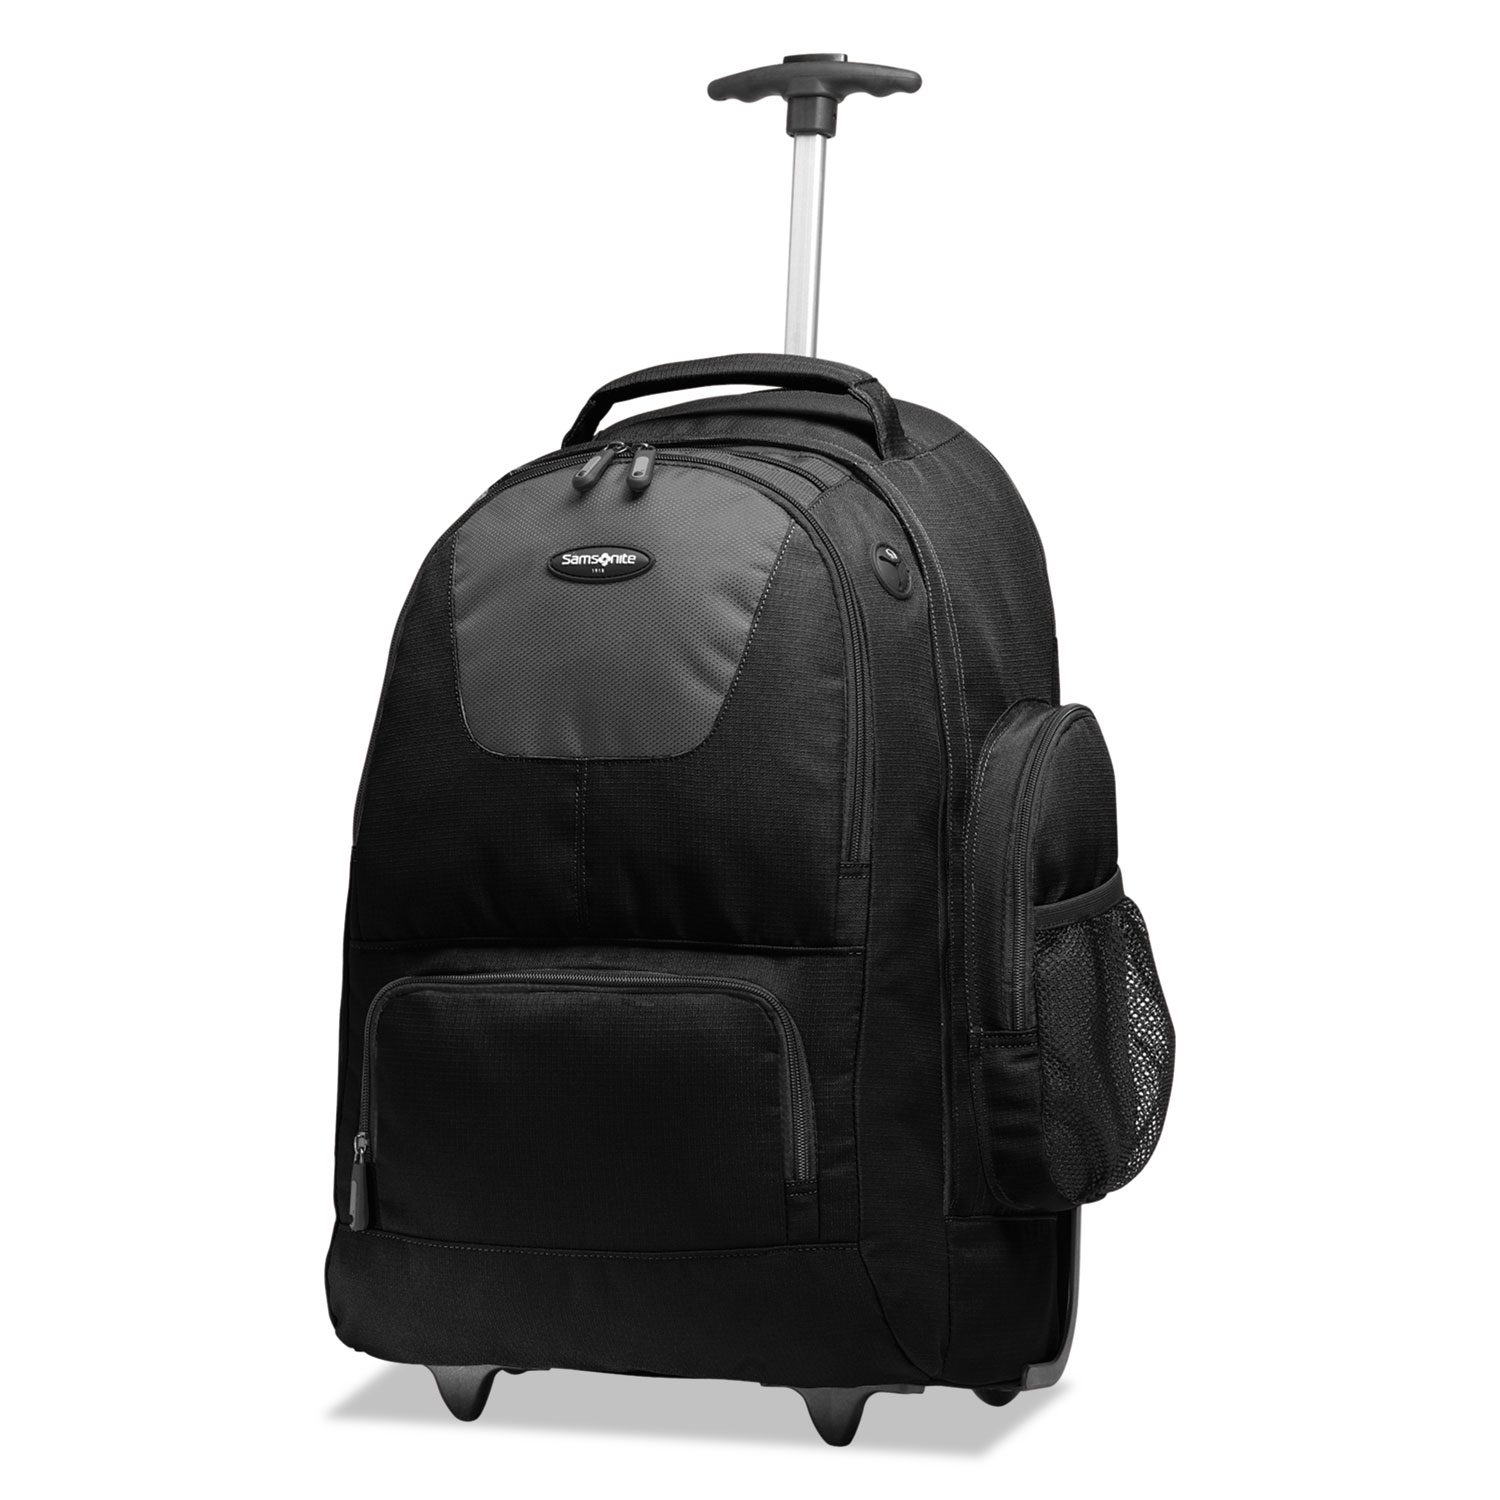 Rolling Backpack, 14 x 8 x 21, Black/Charcoal